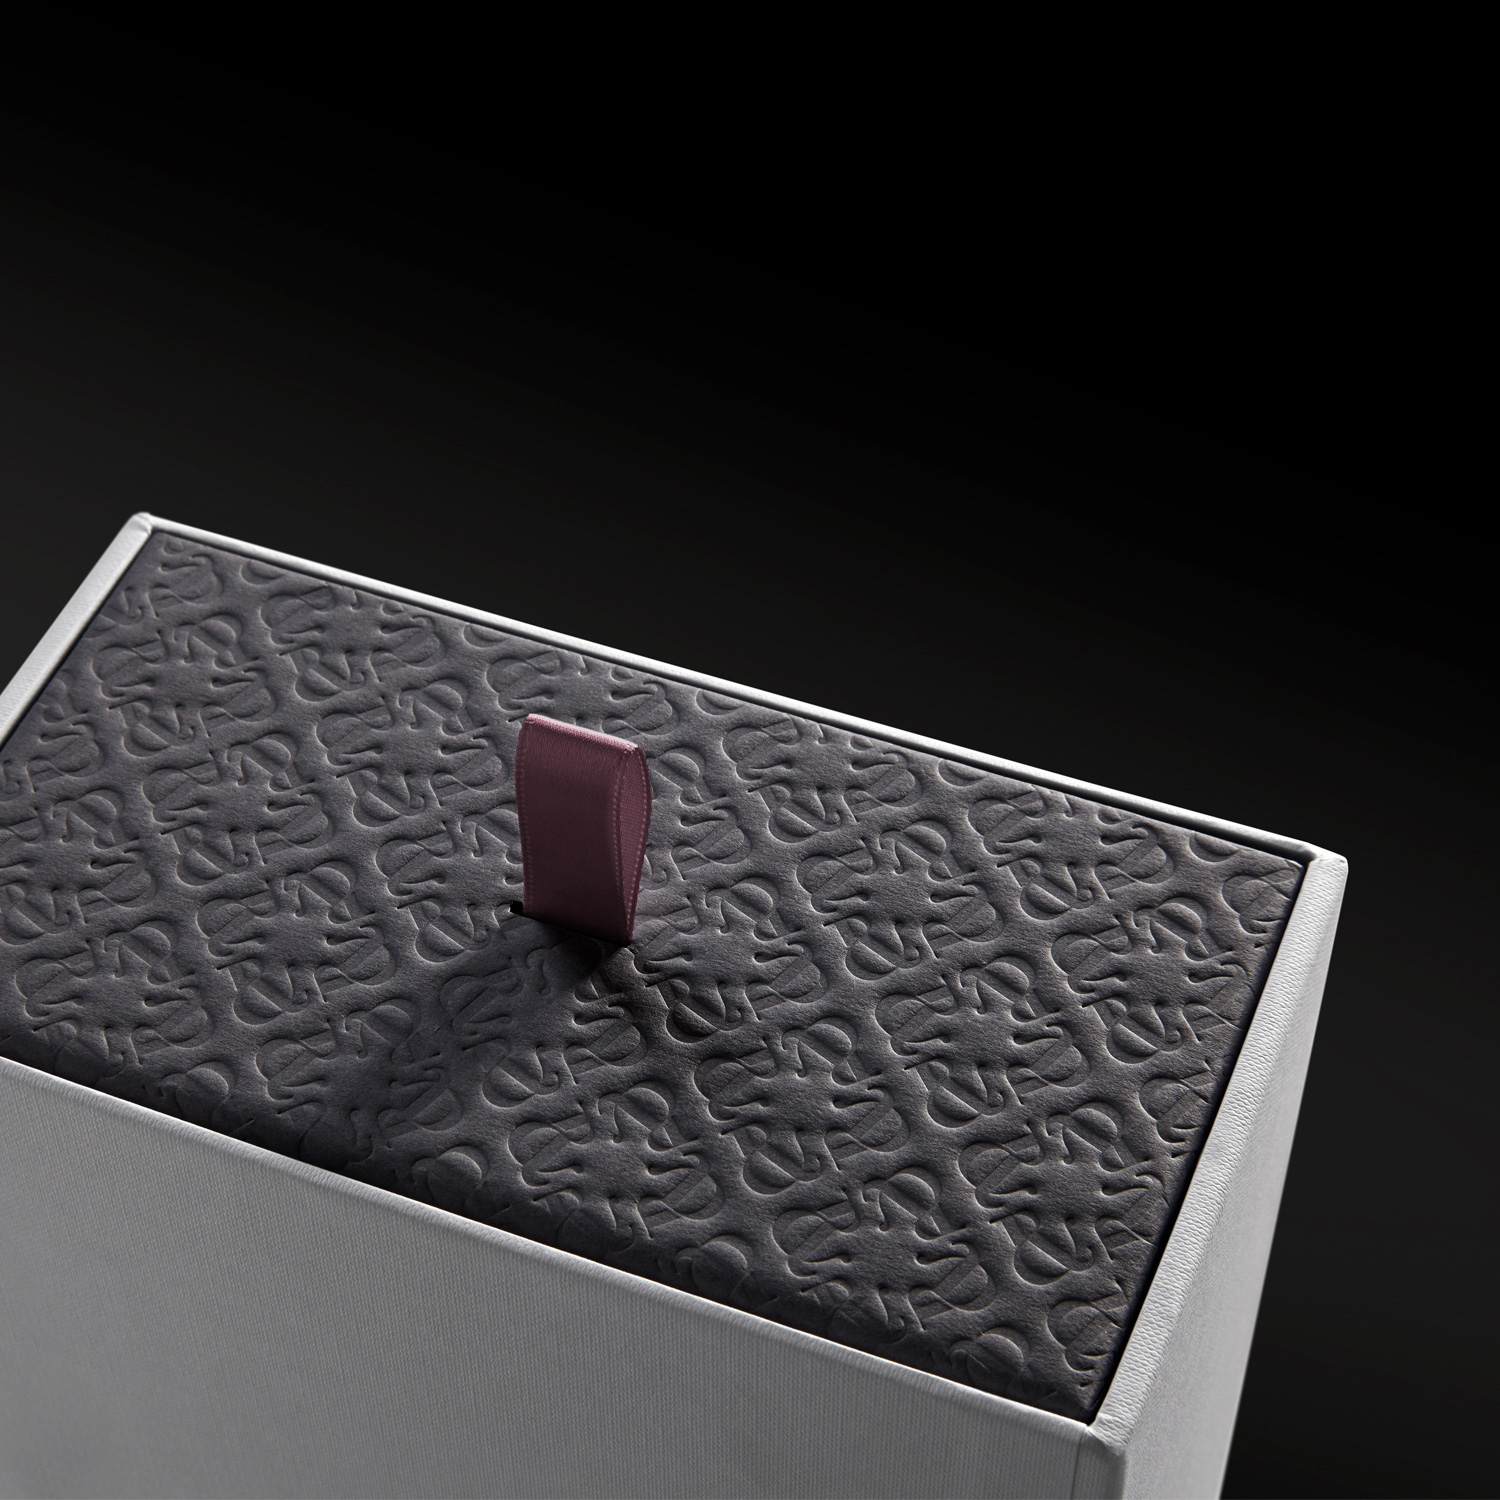 Progress Packaging RalphRusso Copper Foiling Fluted Foil Embossed Luxury Fashion Shoe Box Bespoke